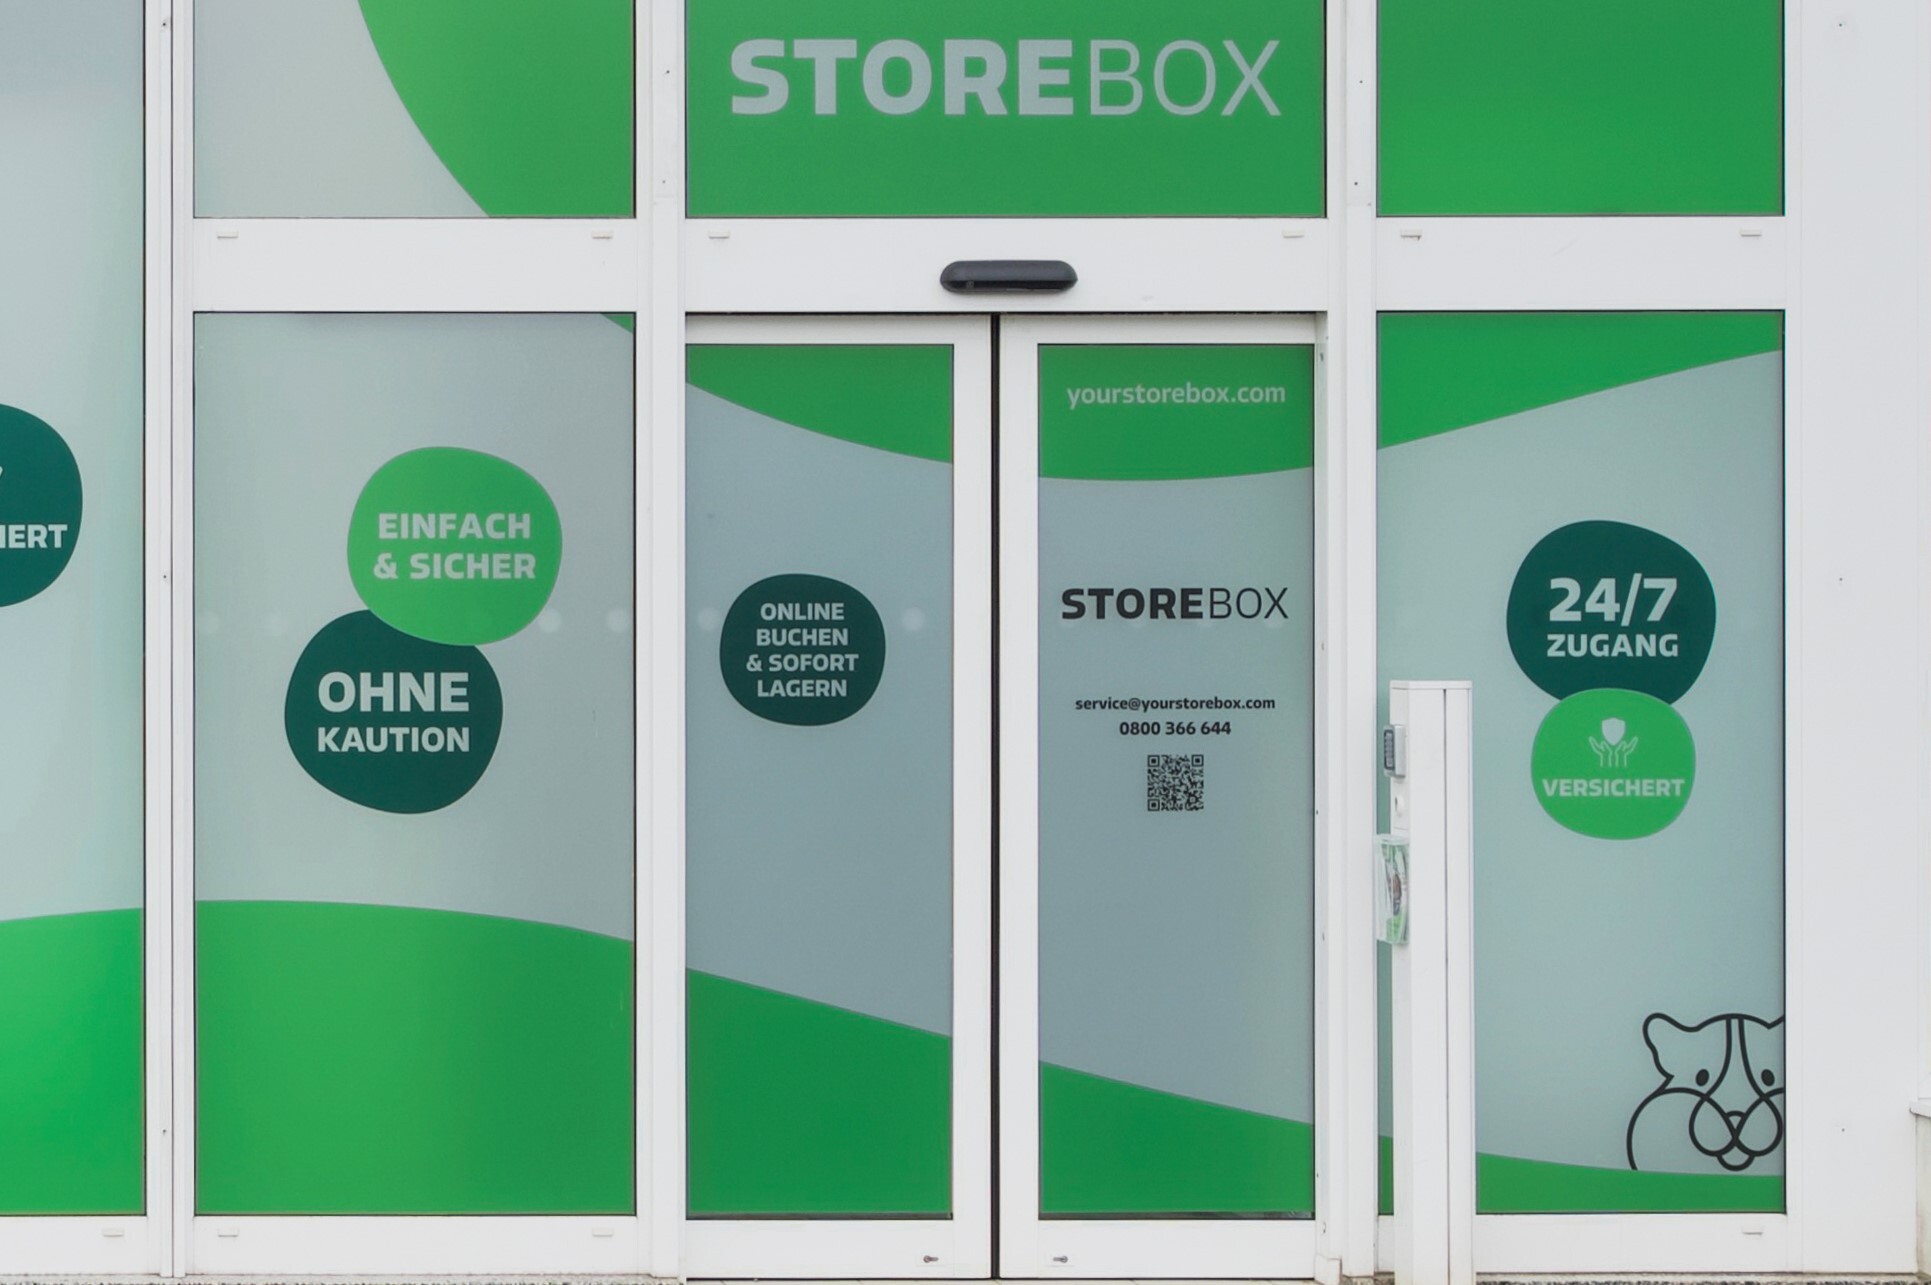 Storebox - Dein Lager nebenan, Blaubach 4 in Köln